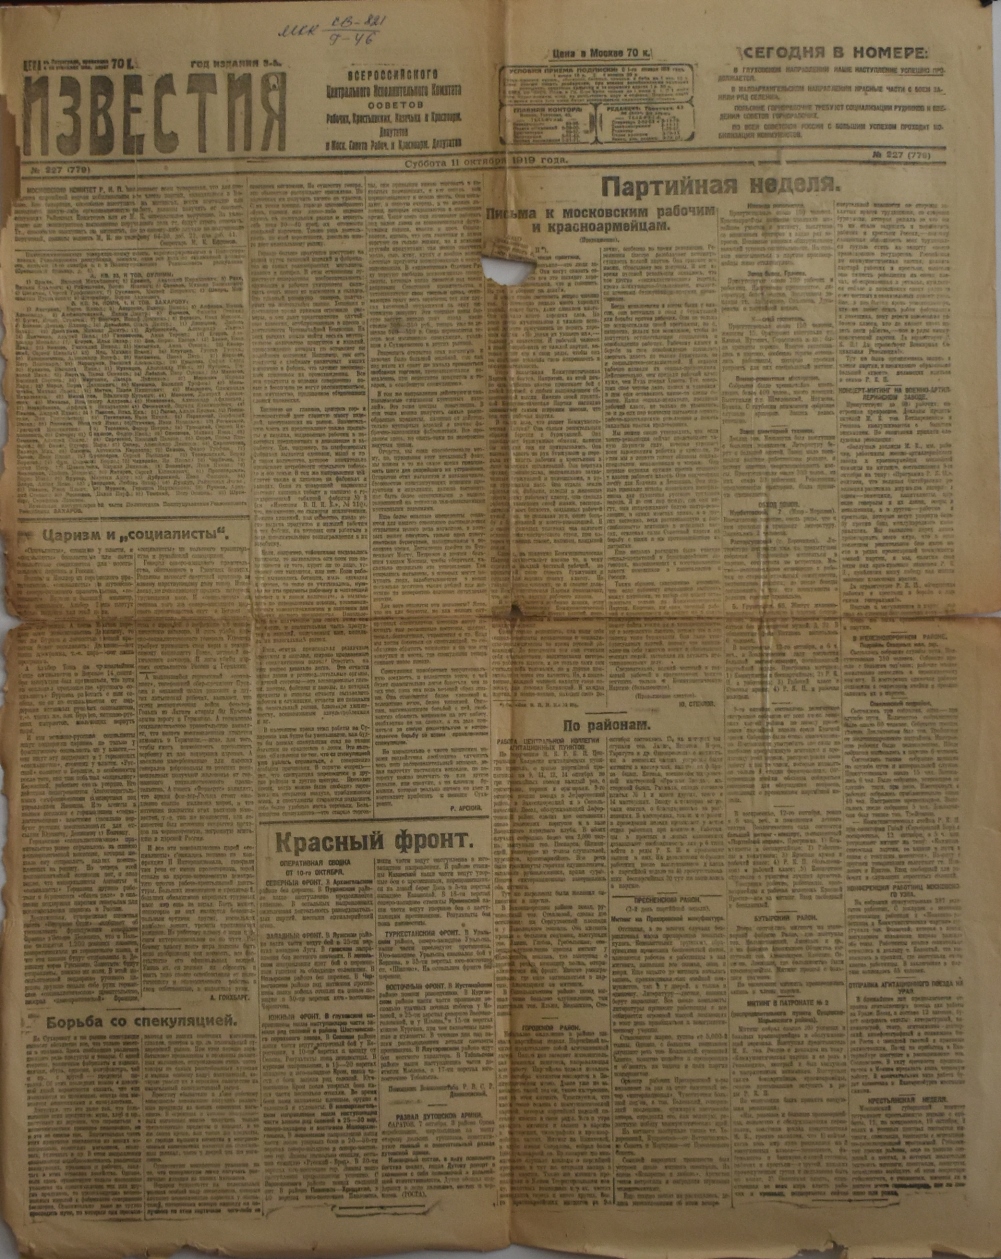 Газета "Известия" № 227 (779), субота 11 жовтня 1919 року